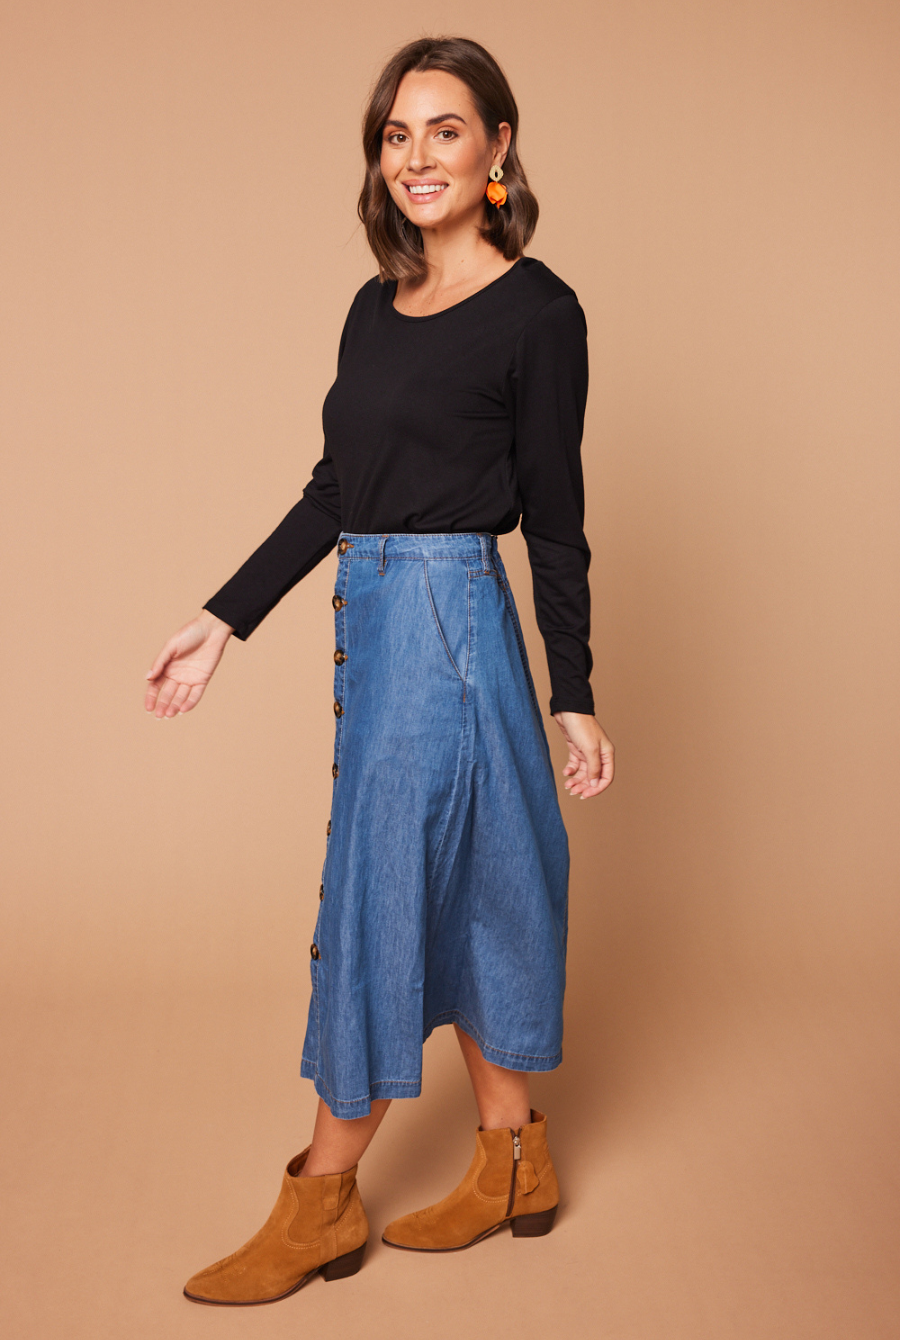 Agua Bendita Teresa Mini Skirt | Anthropologie Japan - Women's Clothing,  Accessories & Home